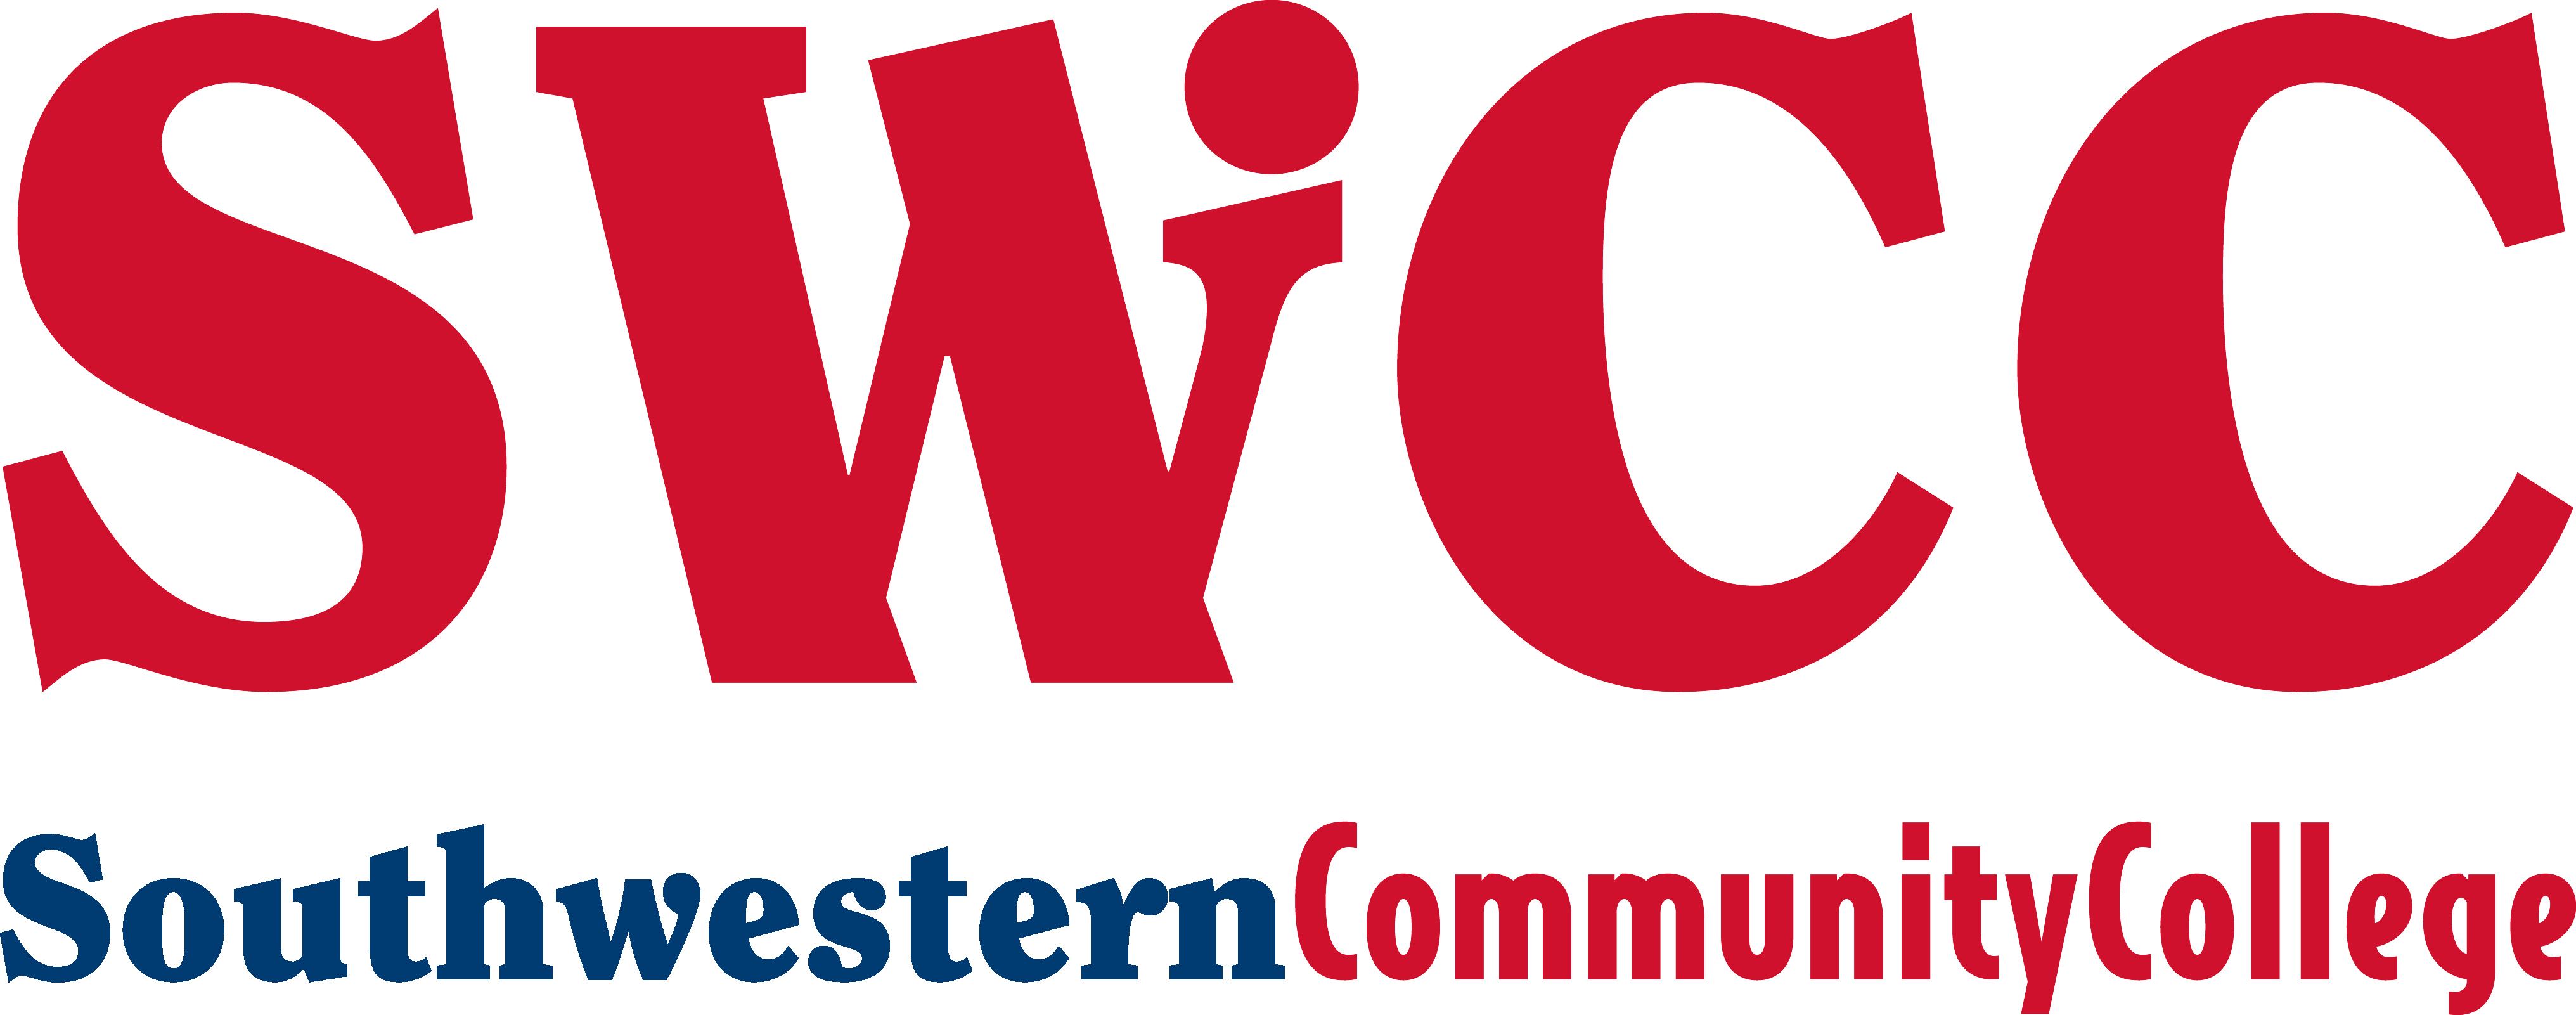 Southwestern Community College Logo